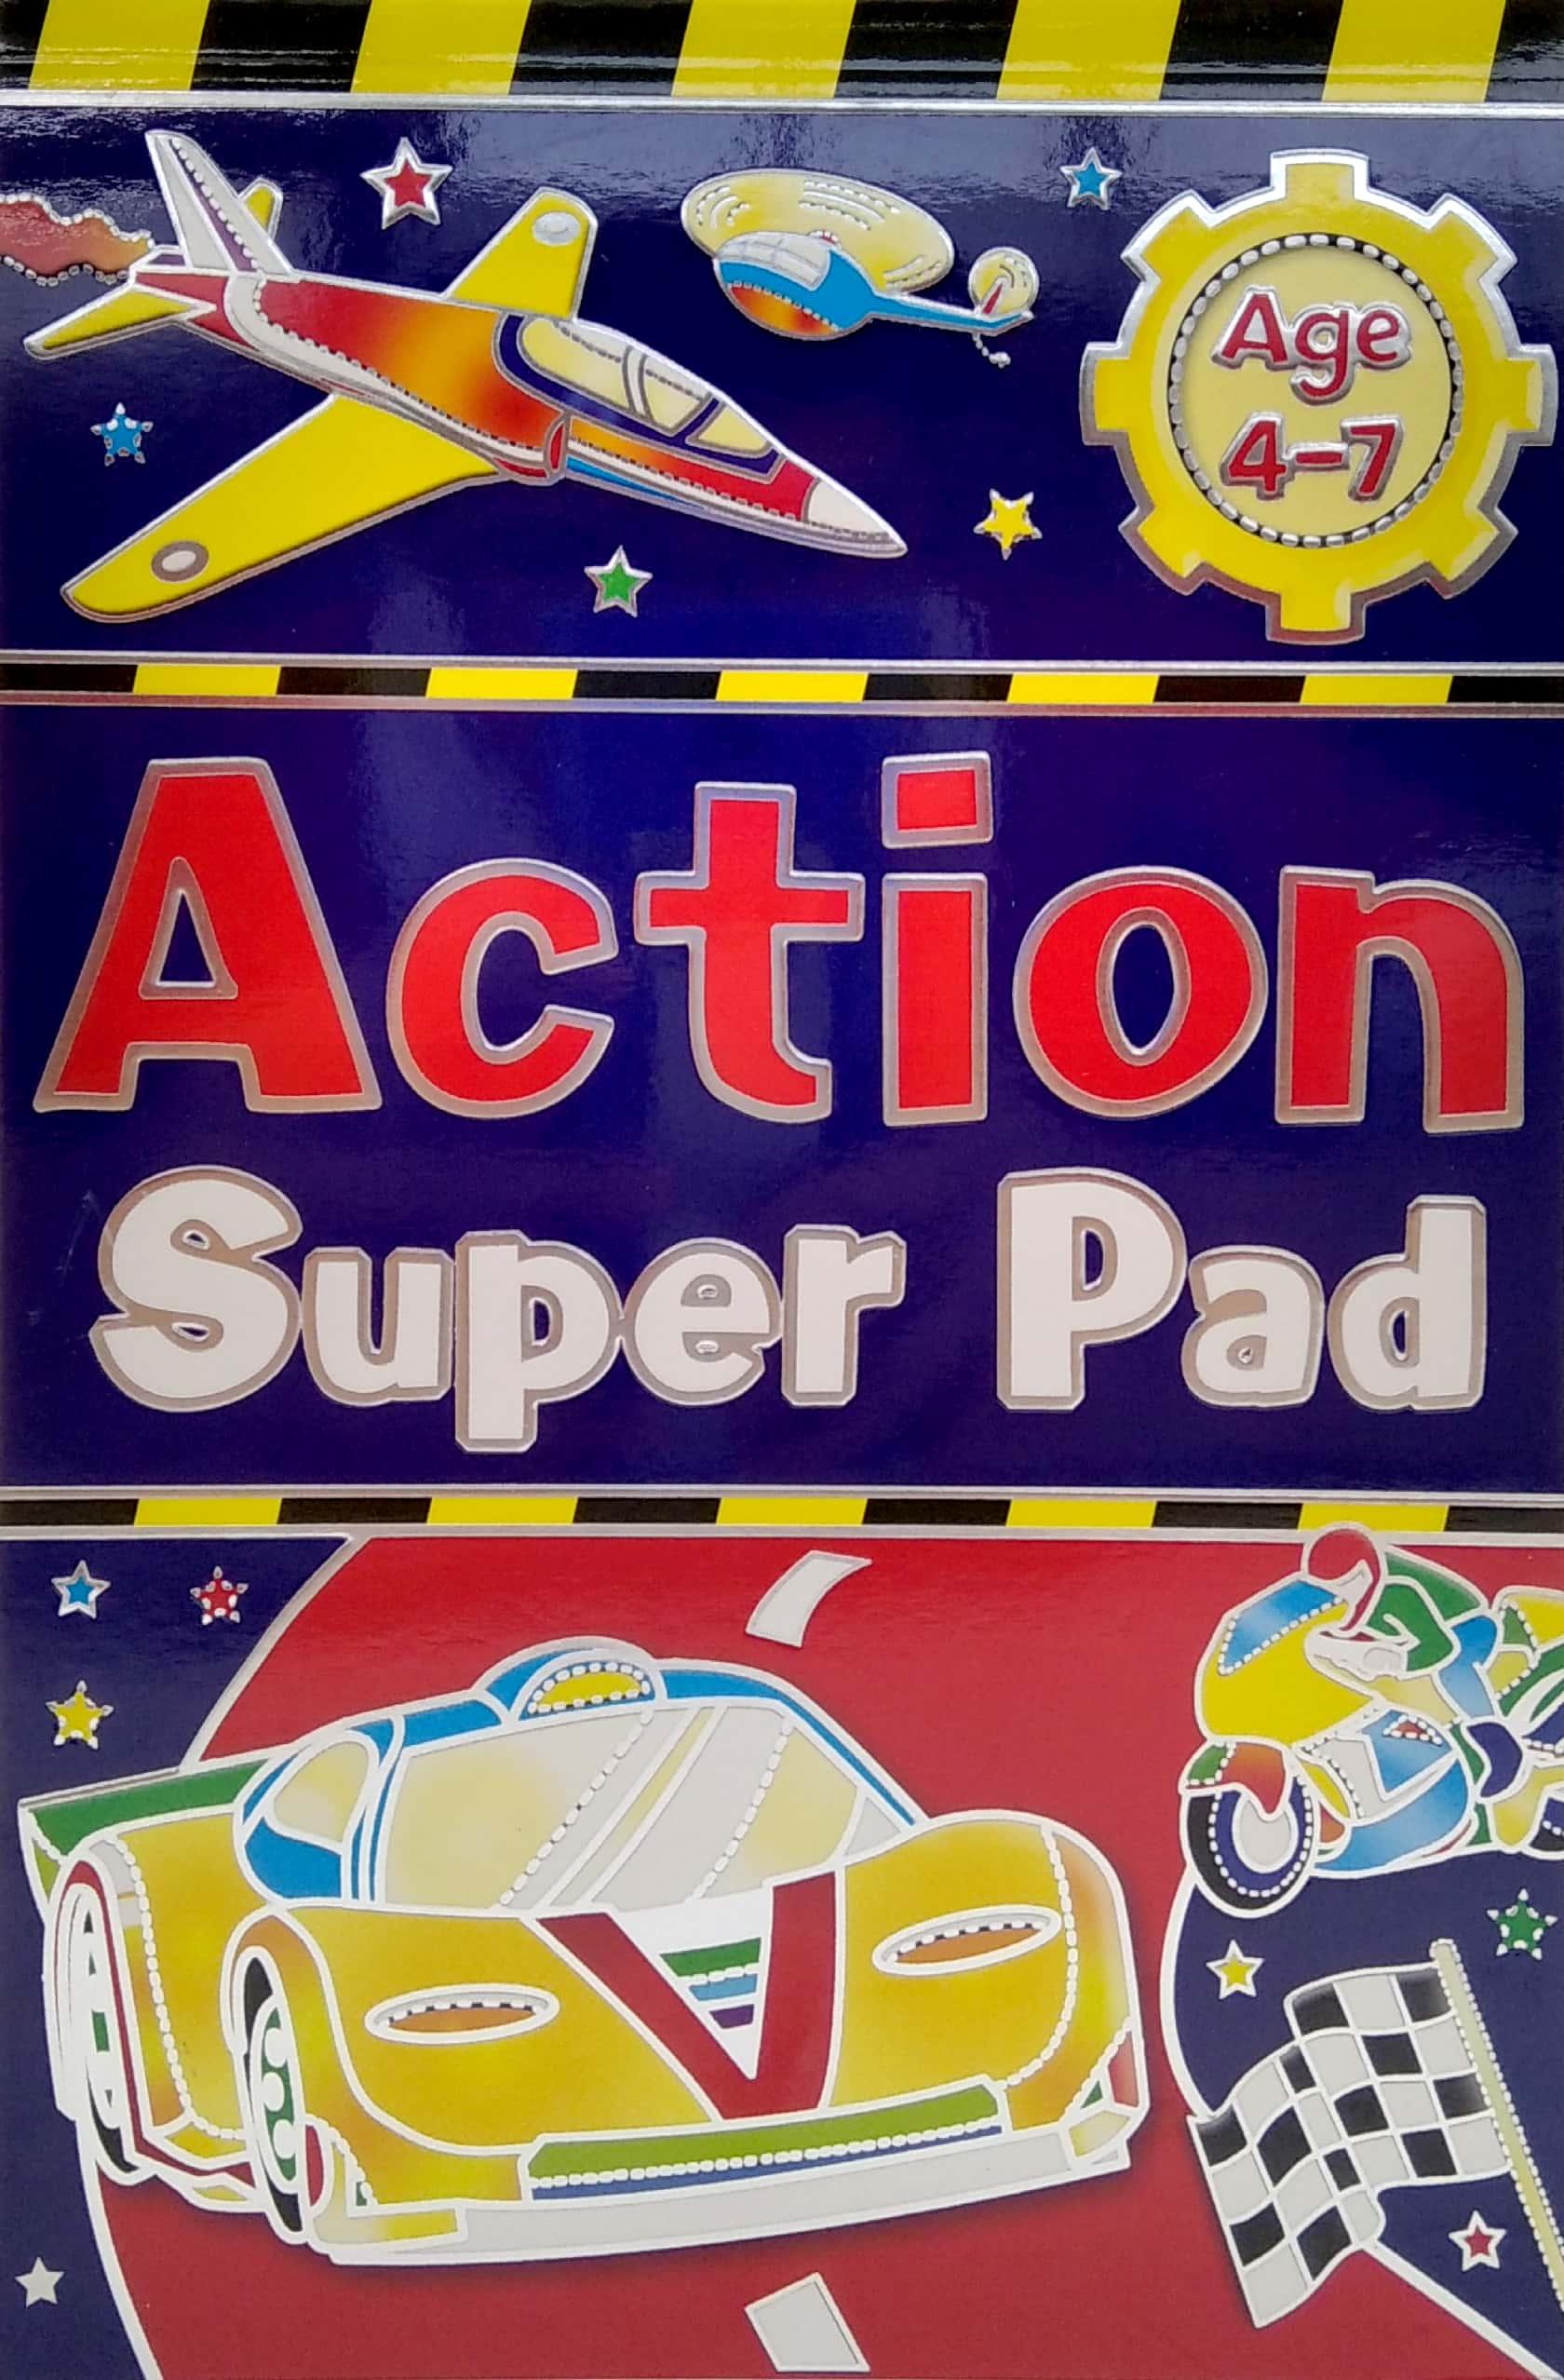 Action Super Pad